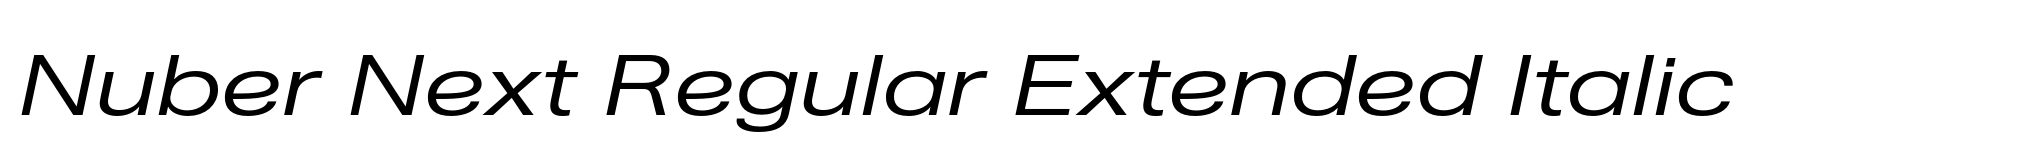 Nuber Next Regular Extended Italic image